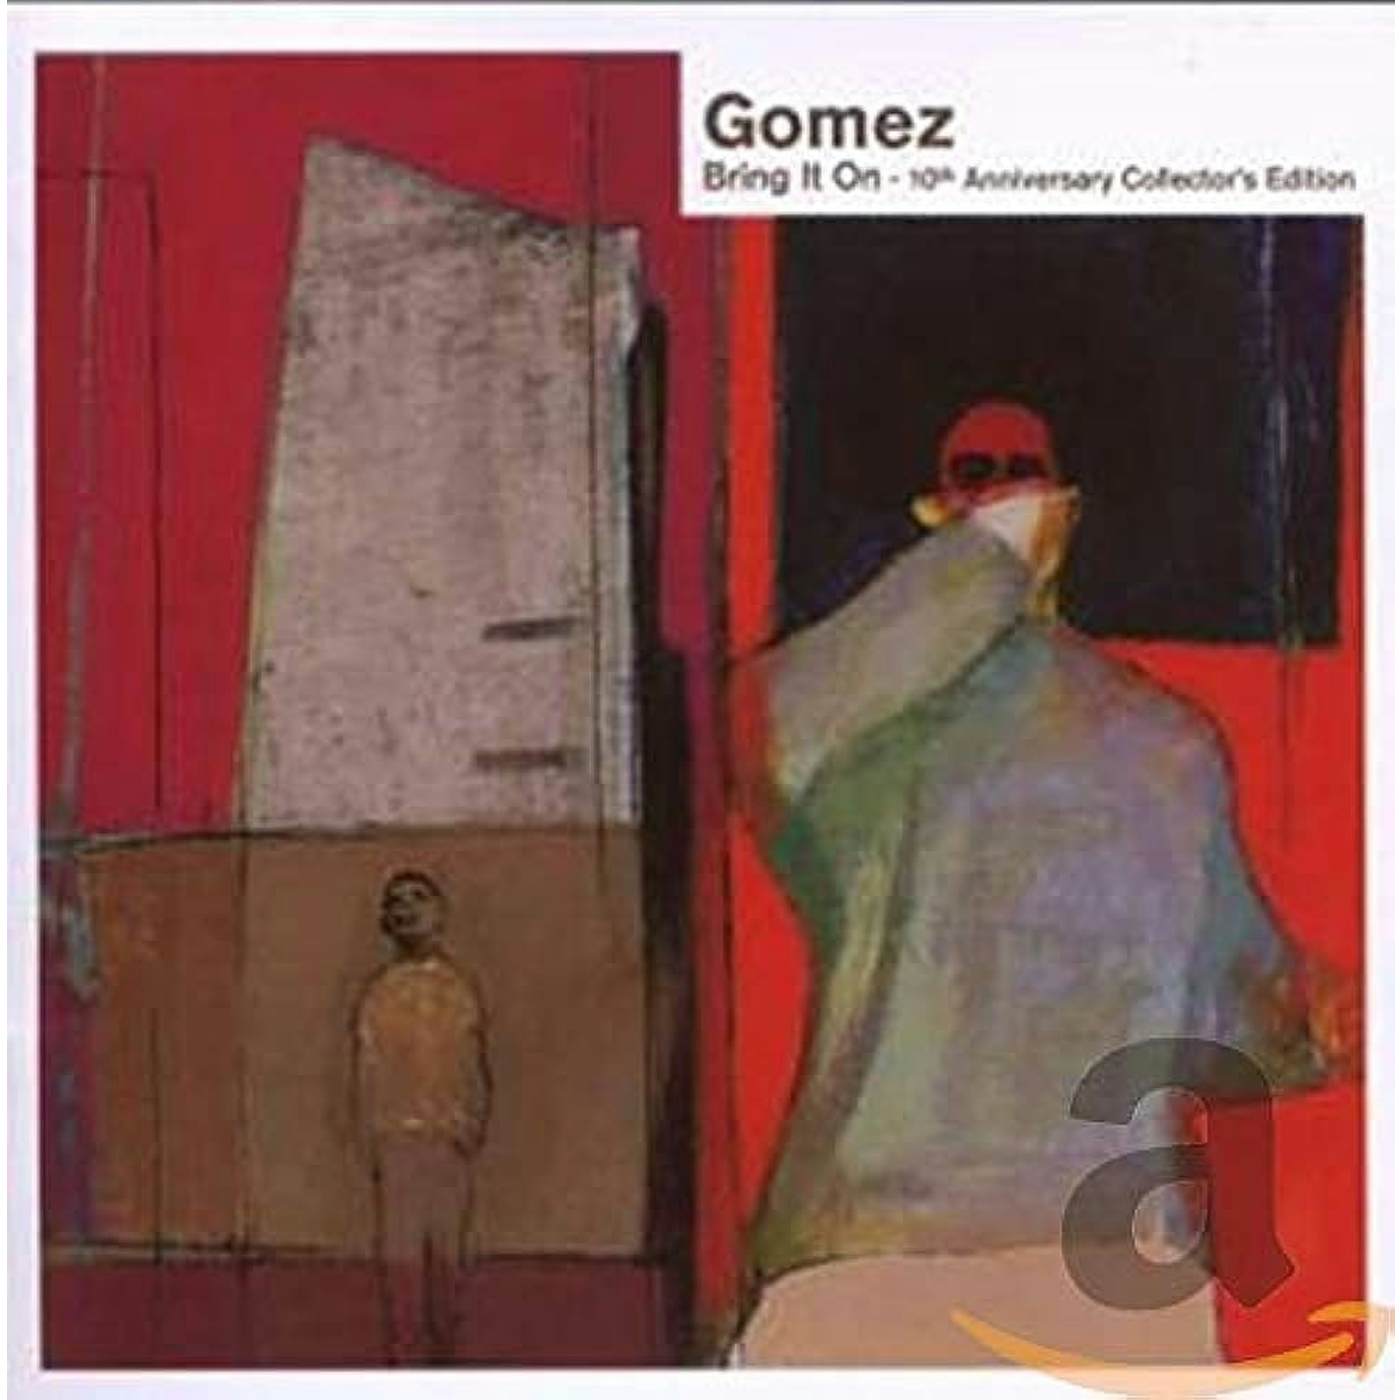 Gomez - Bring It On-10th Anniversary